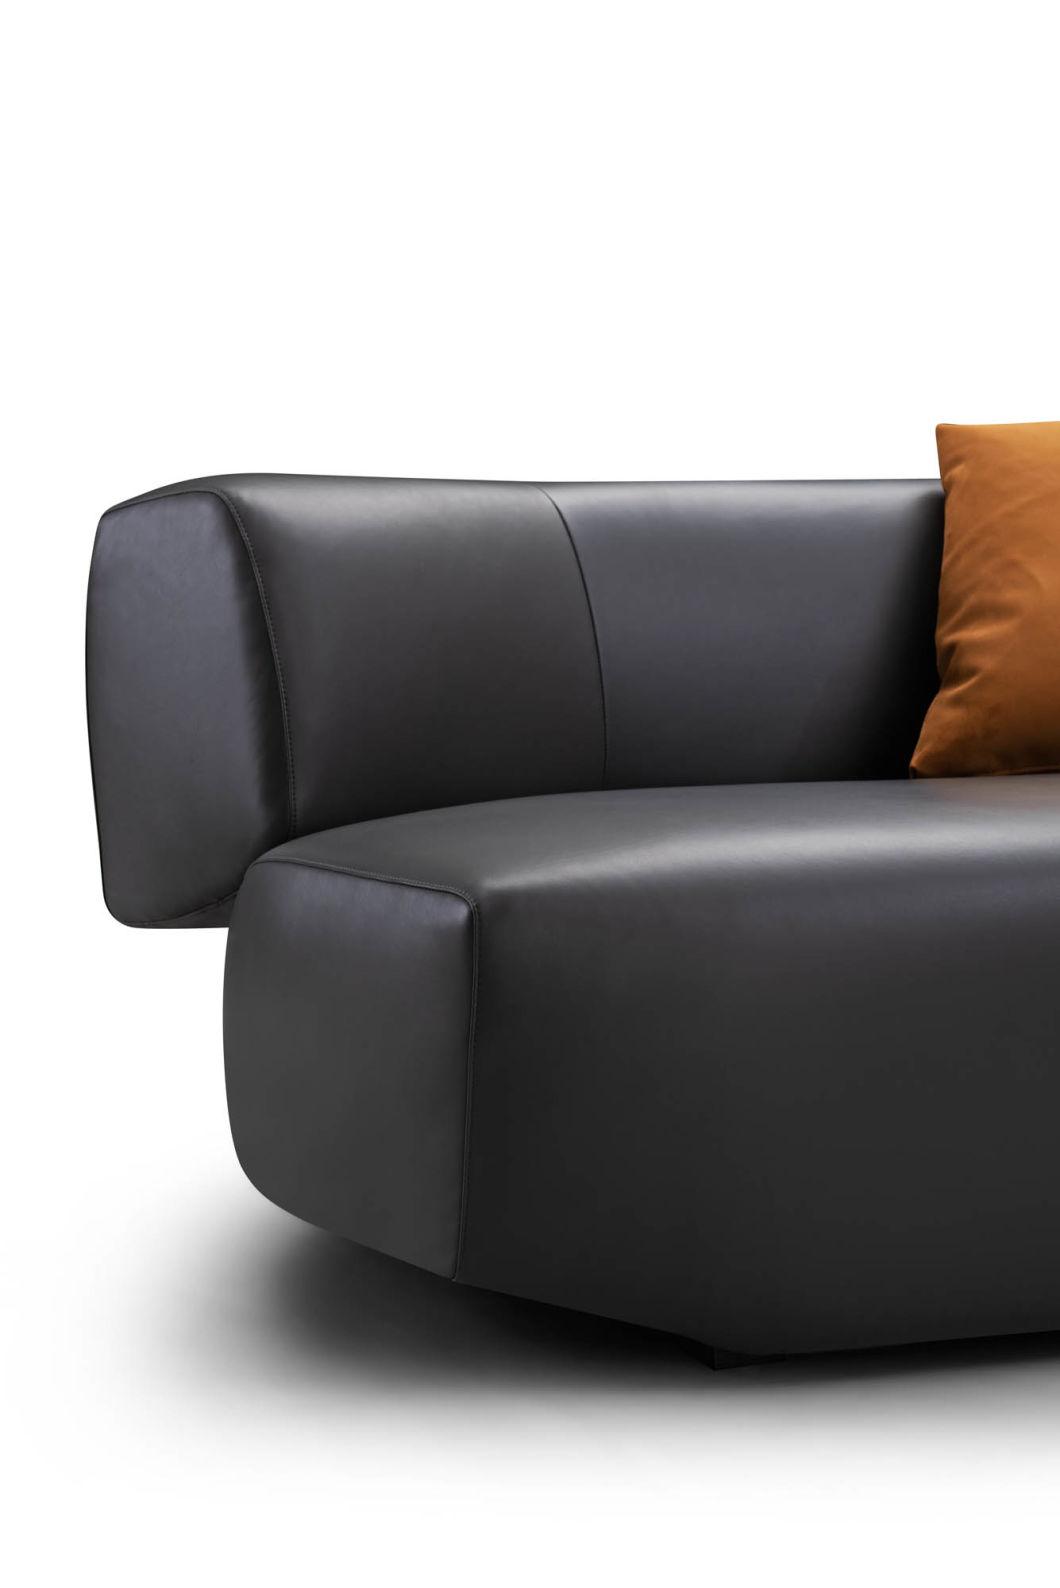 Customized 3 Seater Sofa Set Living Room Sofas Bedroom Furniture Modern Design Air Leather Sofa